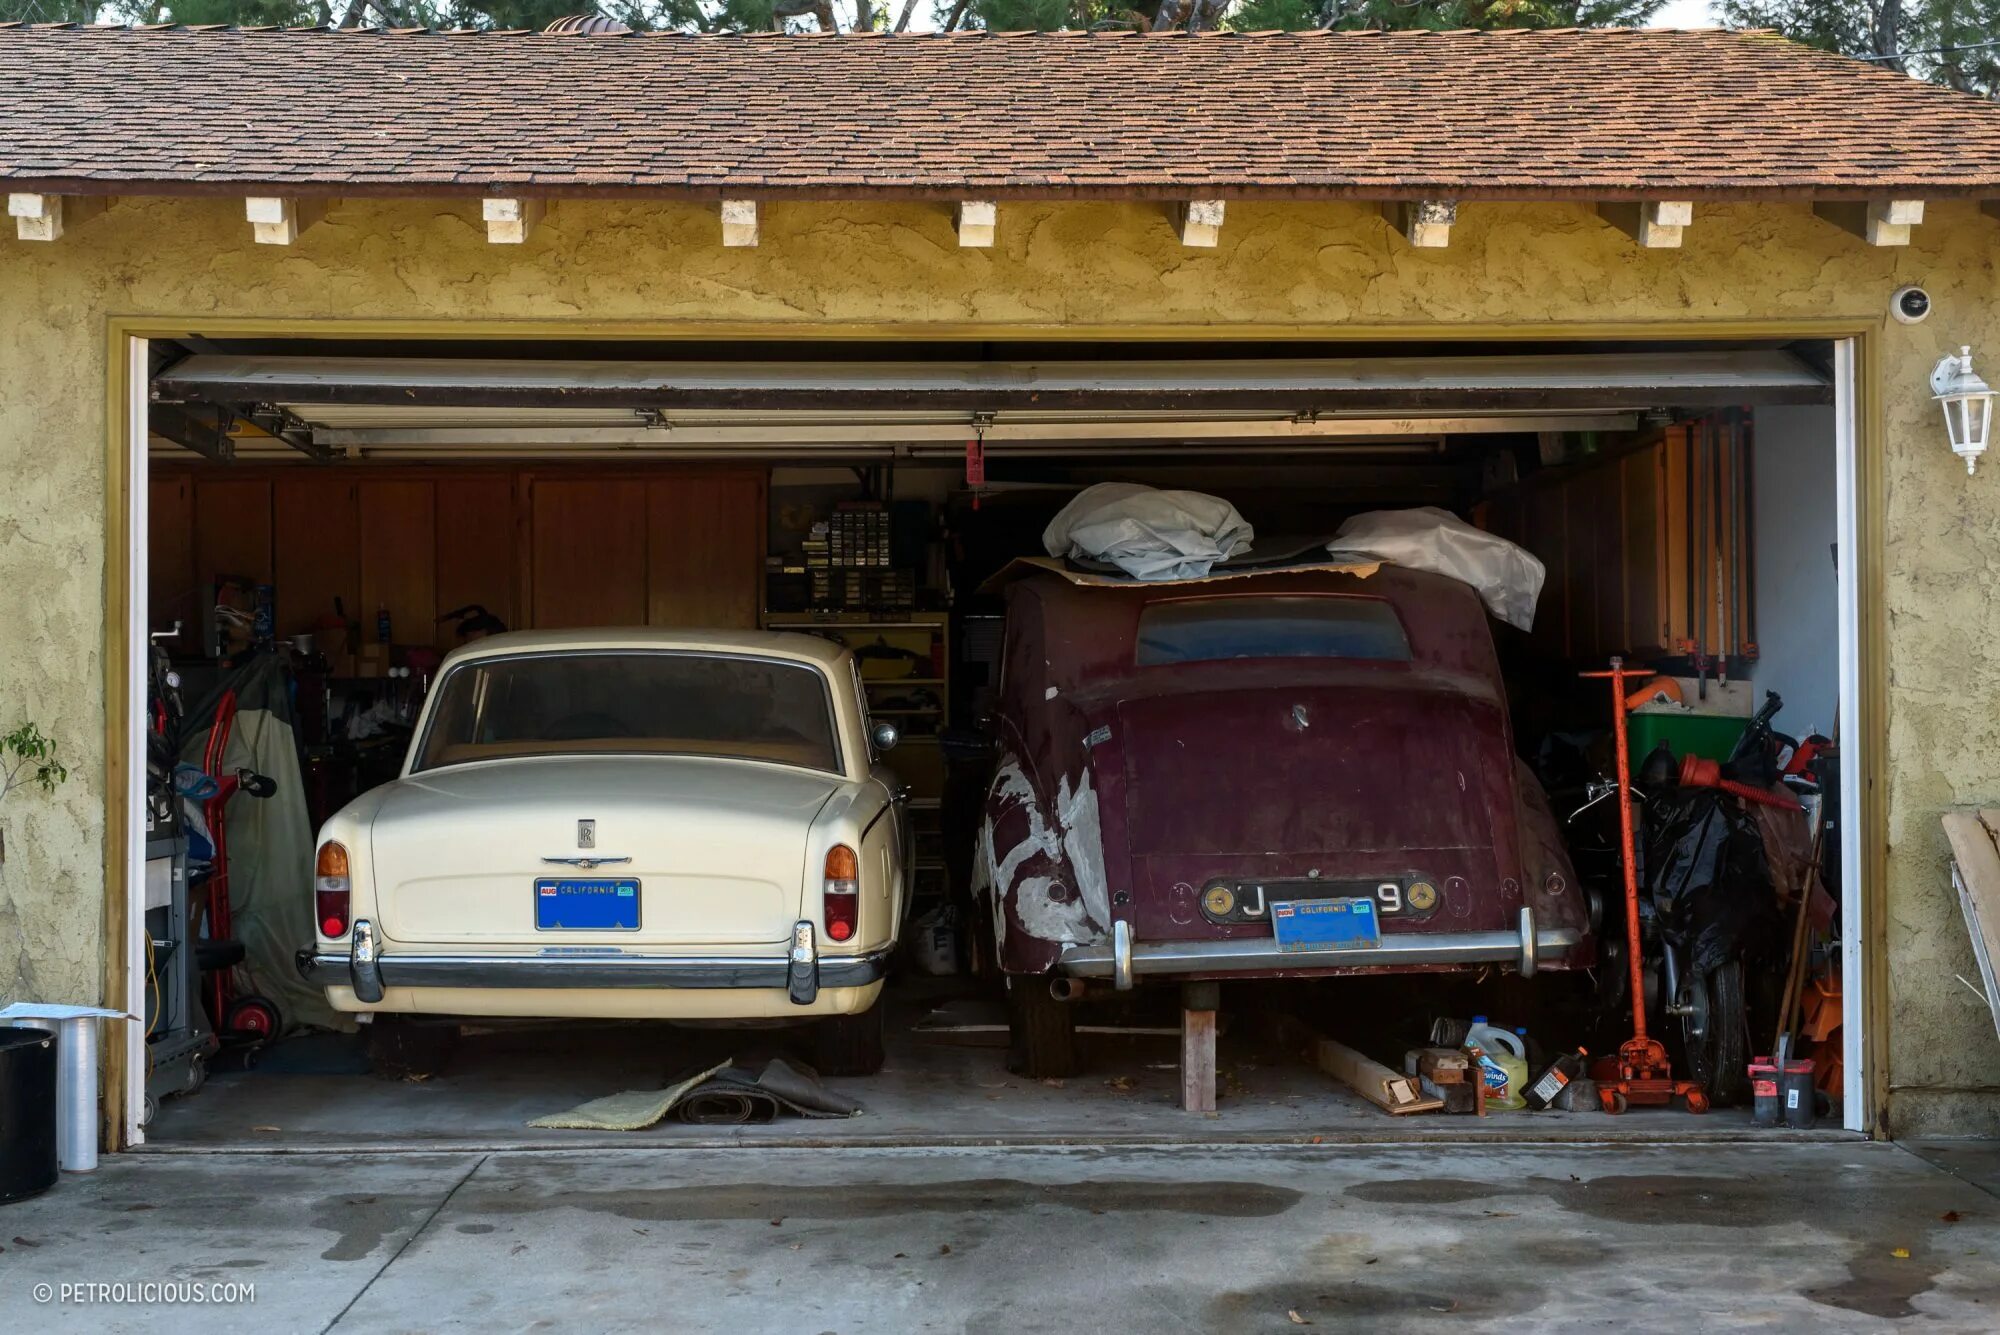 Машина в гараже. Гараж старый. Старый автомобиль в гараже. Старинный гараж.